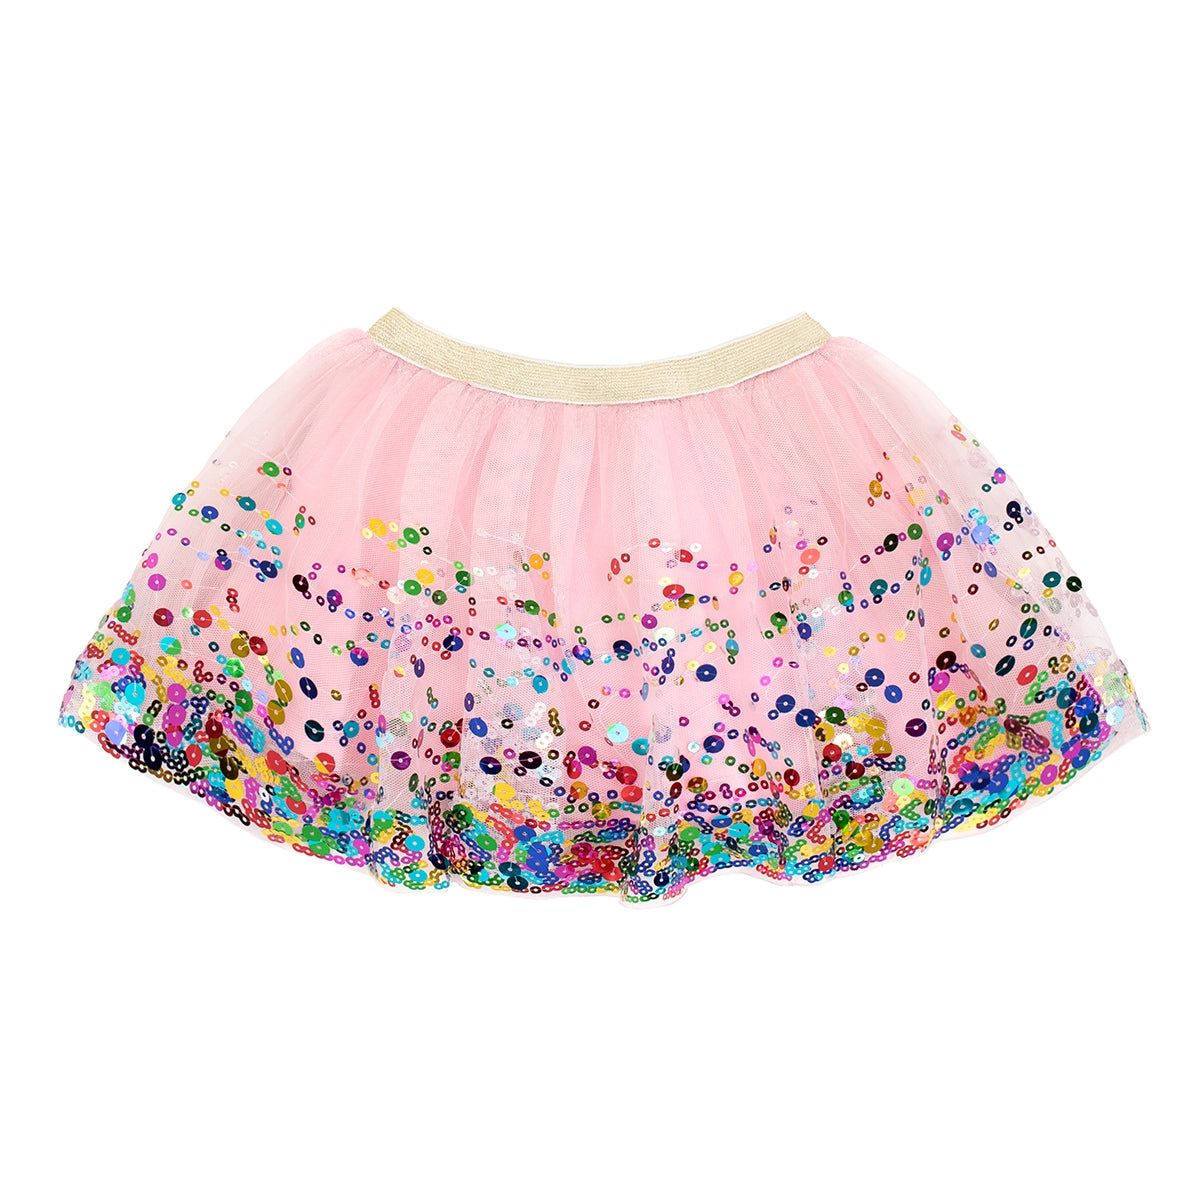 Pink Confetti Tutu  - Doodlebug's Children's Boutique